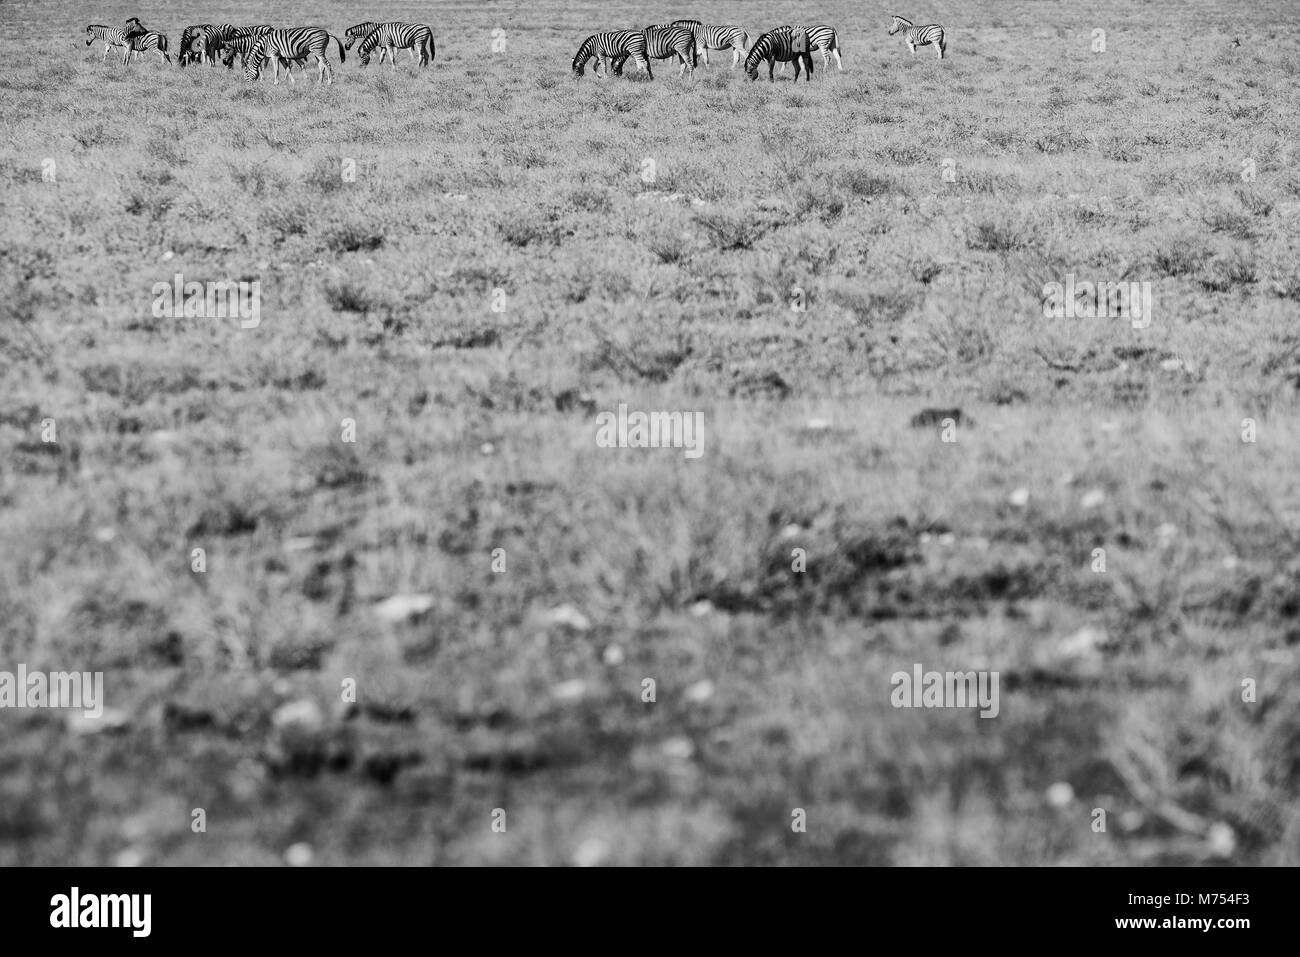 Herd of zebras walking on etosha. Namibia. Africa. Bw version. Stock Photo